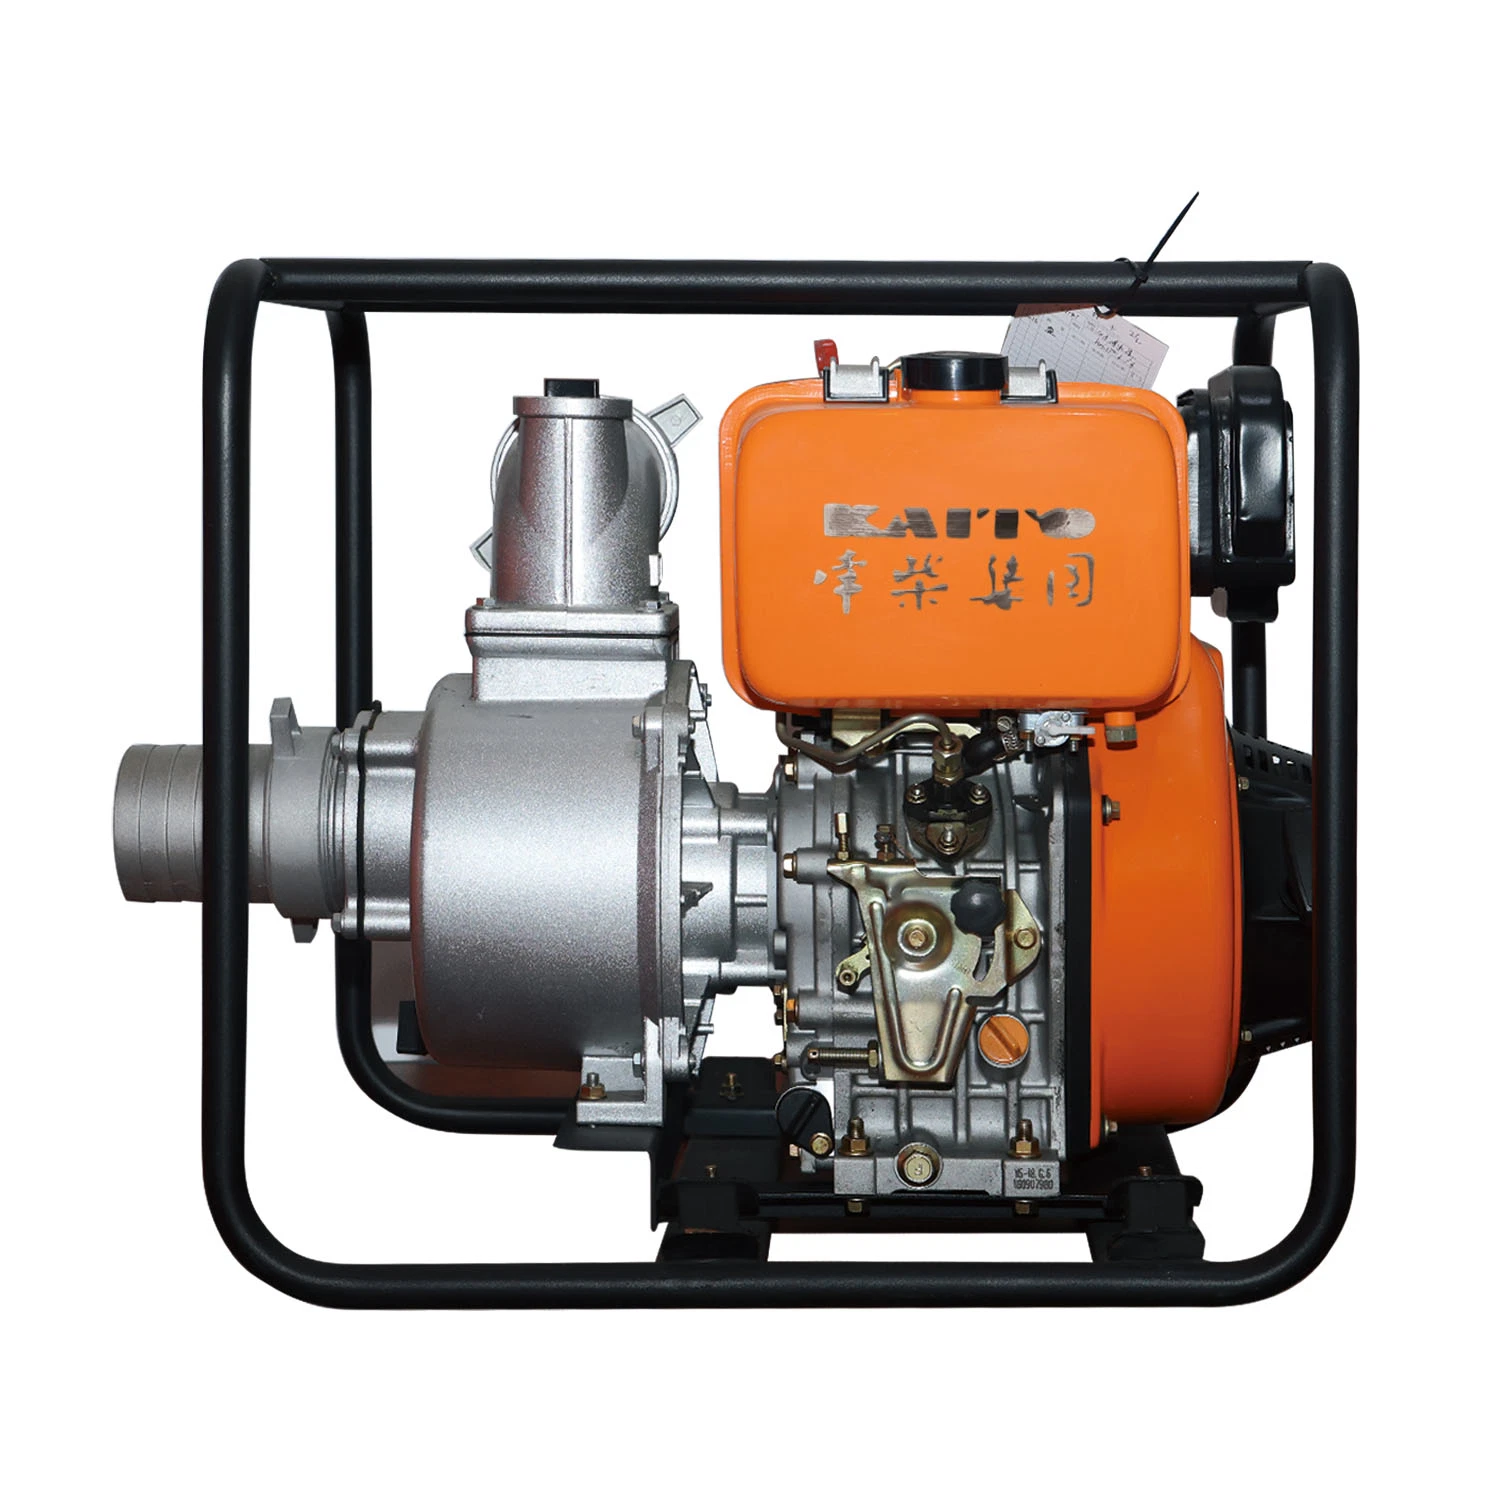 Single Cylinder Air Cooled Diesel Engine for Generators Water Pumps etc